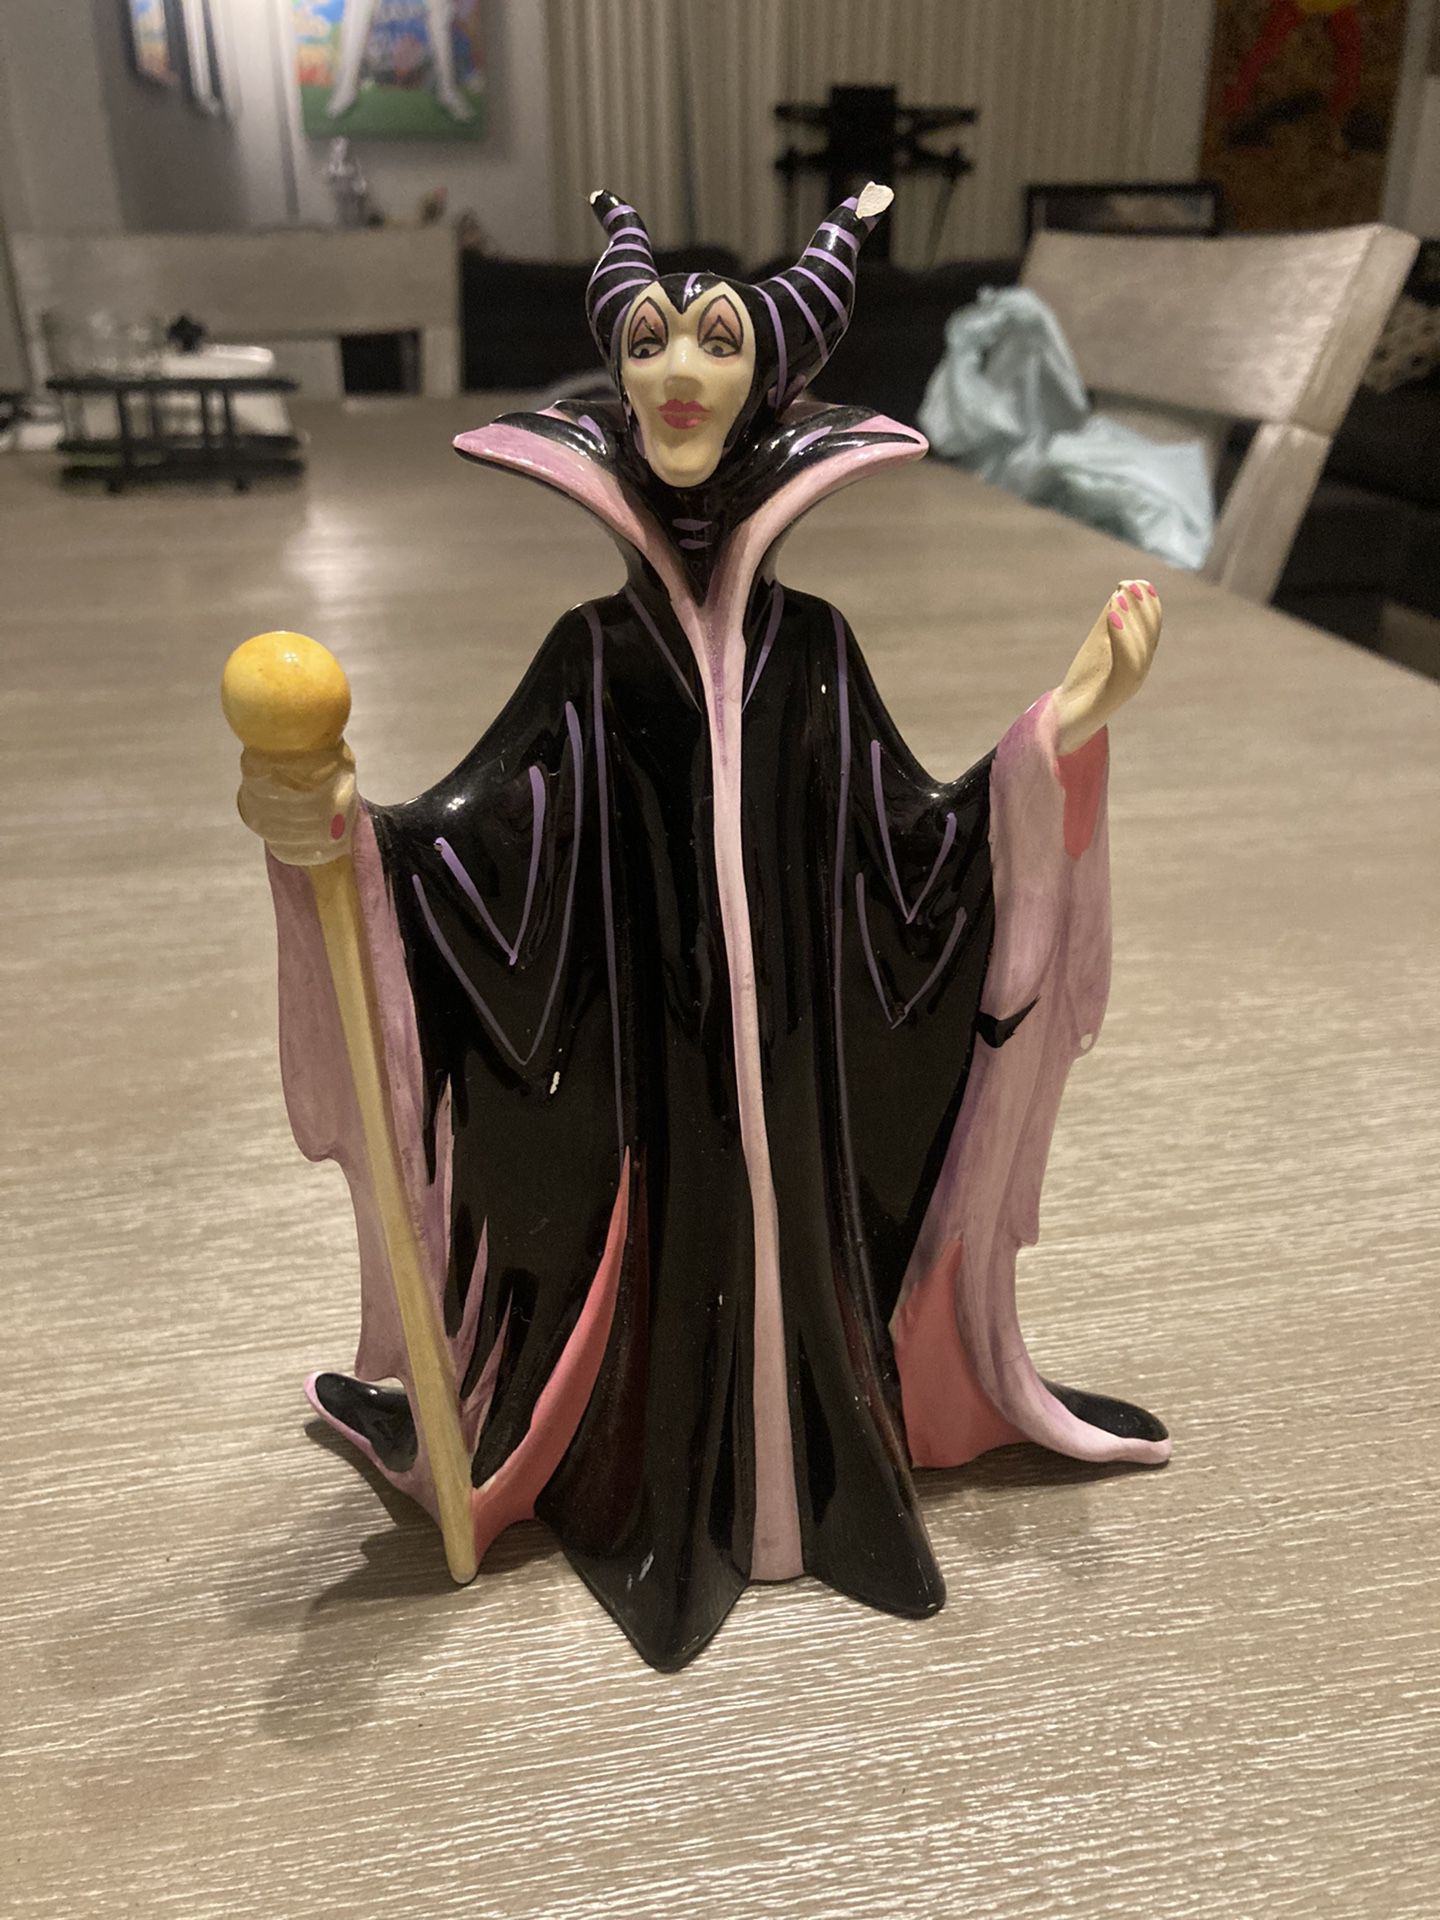 Disney Store Sleeping Beauty 6" MALEFICENT Villain Porcelain Figurine